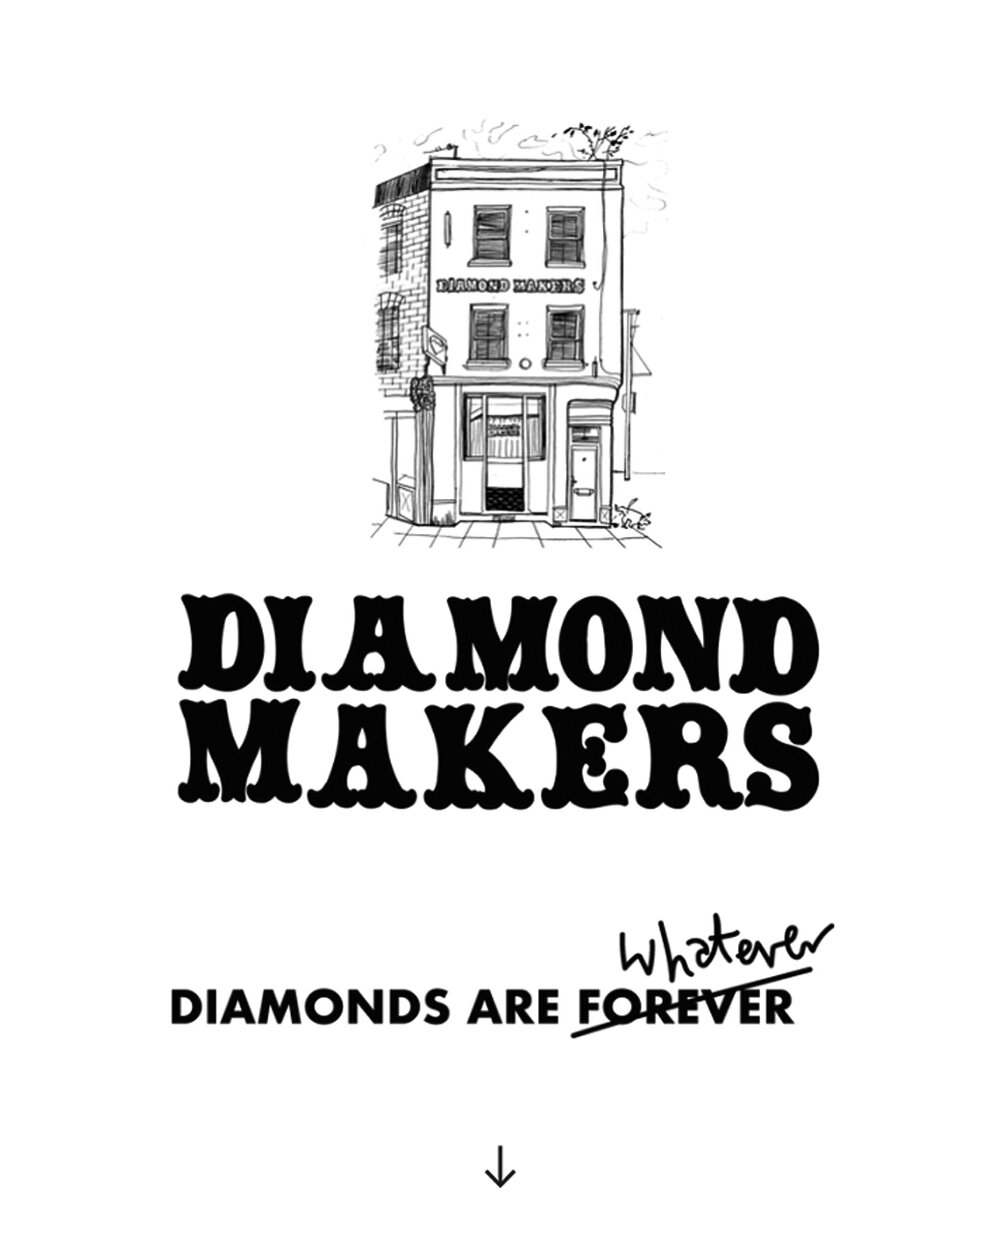 diamond-makers-lab.jpg